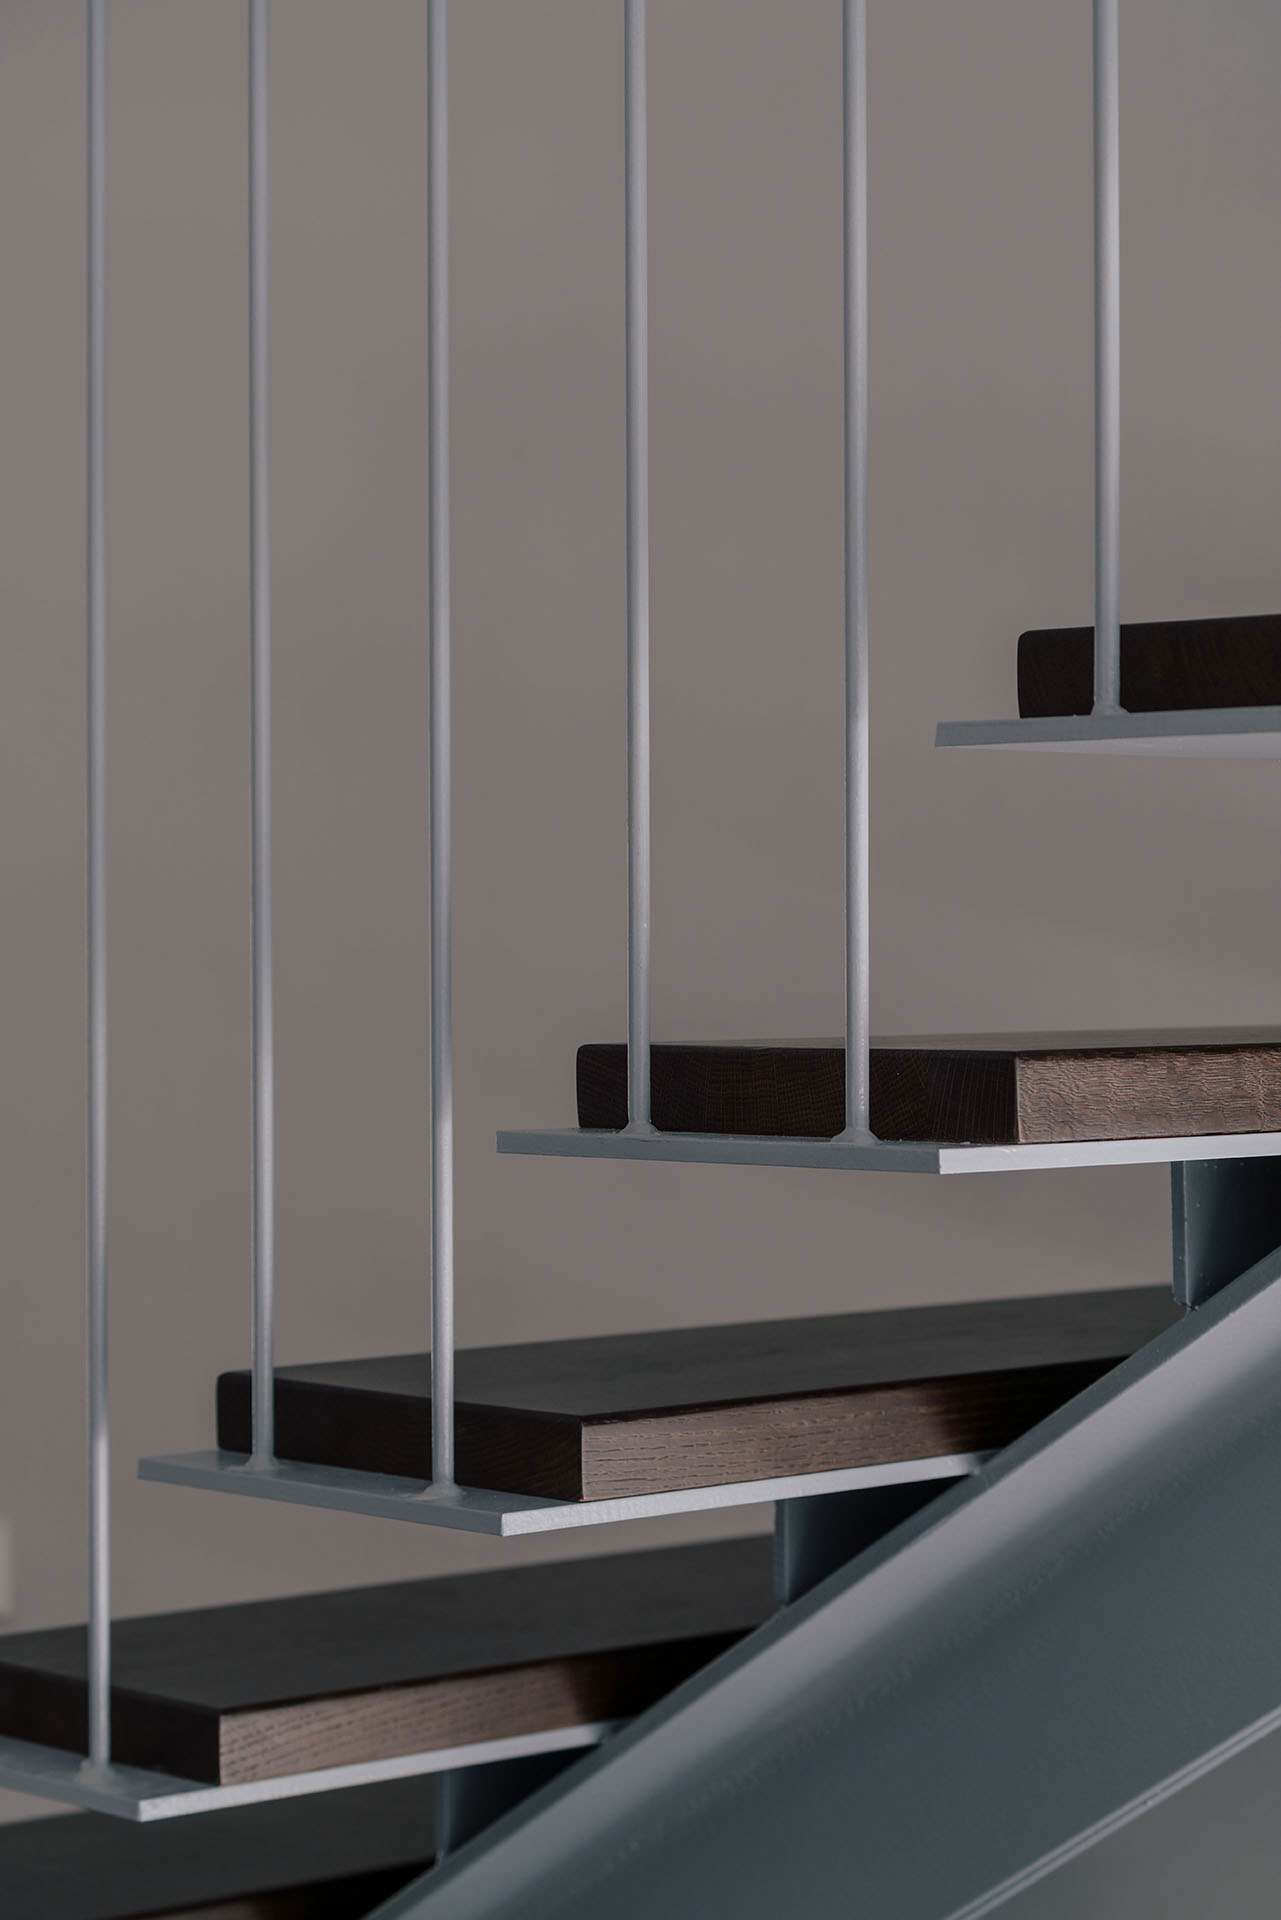 ZOOCO ESTUDIO-M4 House-Visual Atelier 8-Architecture-15.jpg